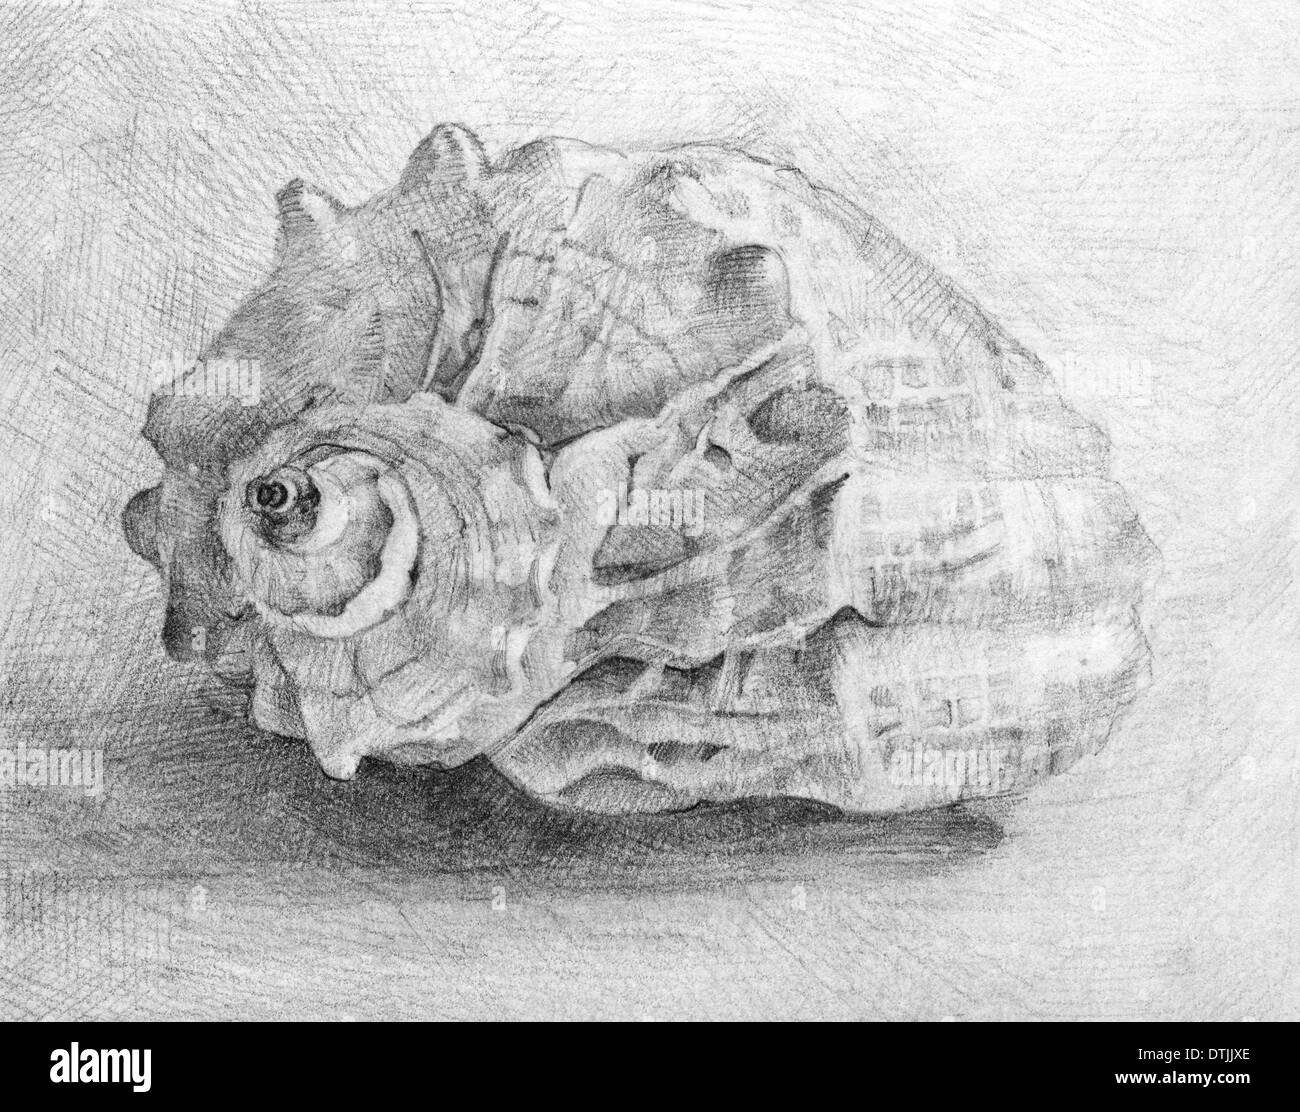 Illustrations,object, drawing, shell, seashell Stock Photo